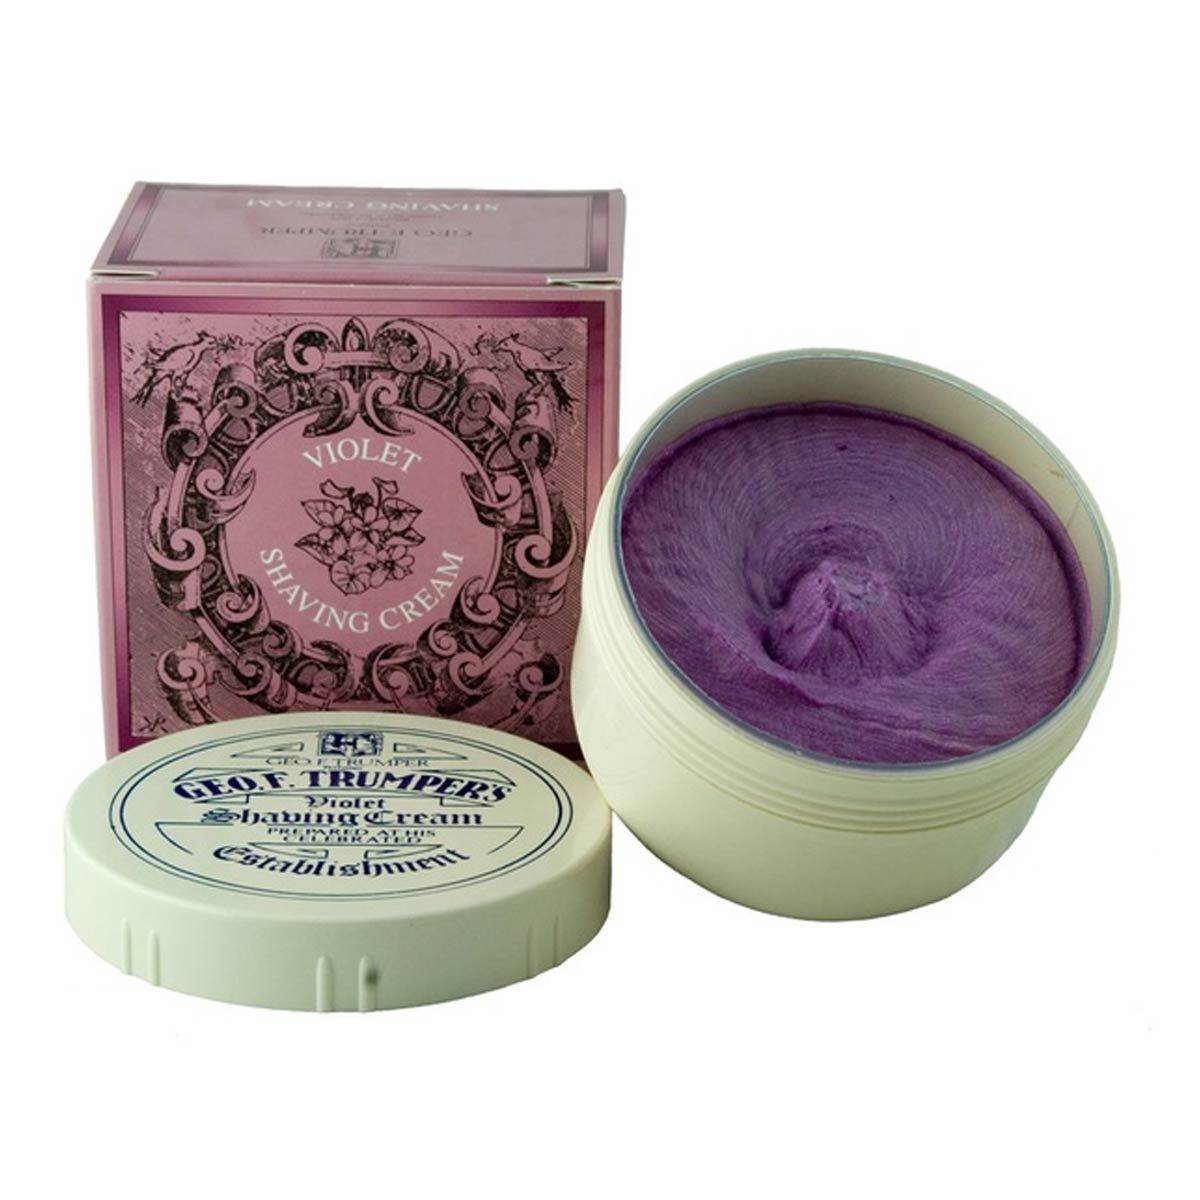 Primary image of Violet Soft Shaving Cream